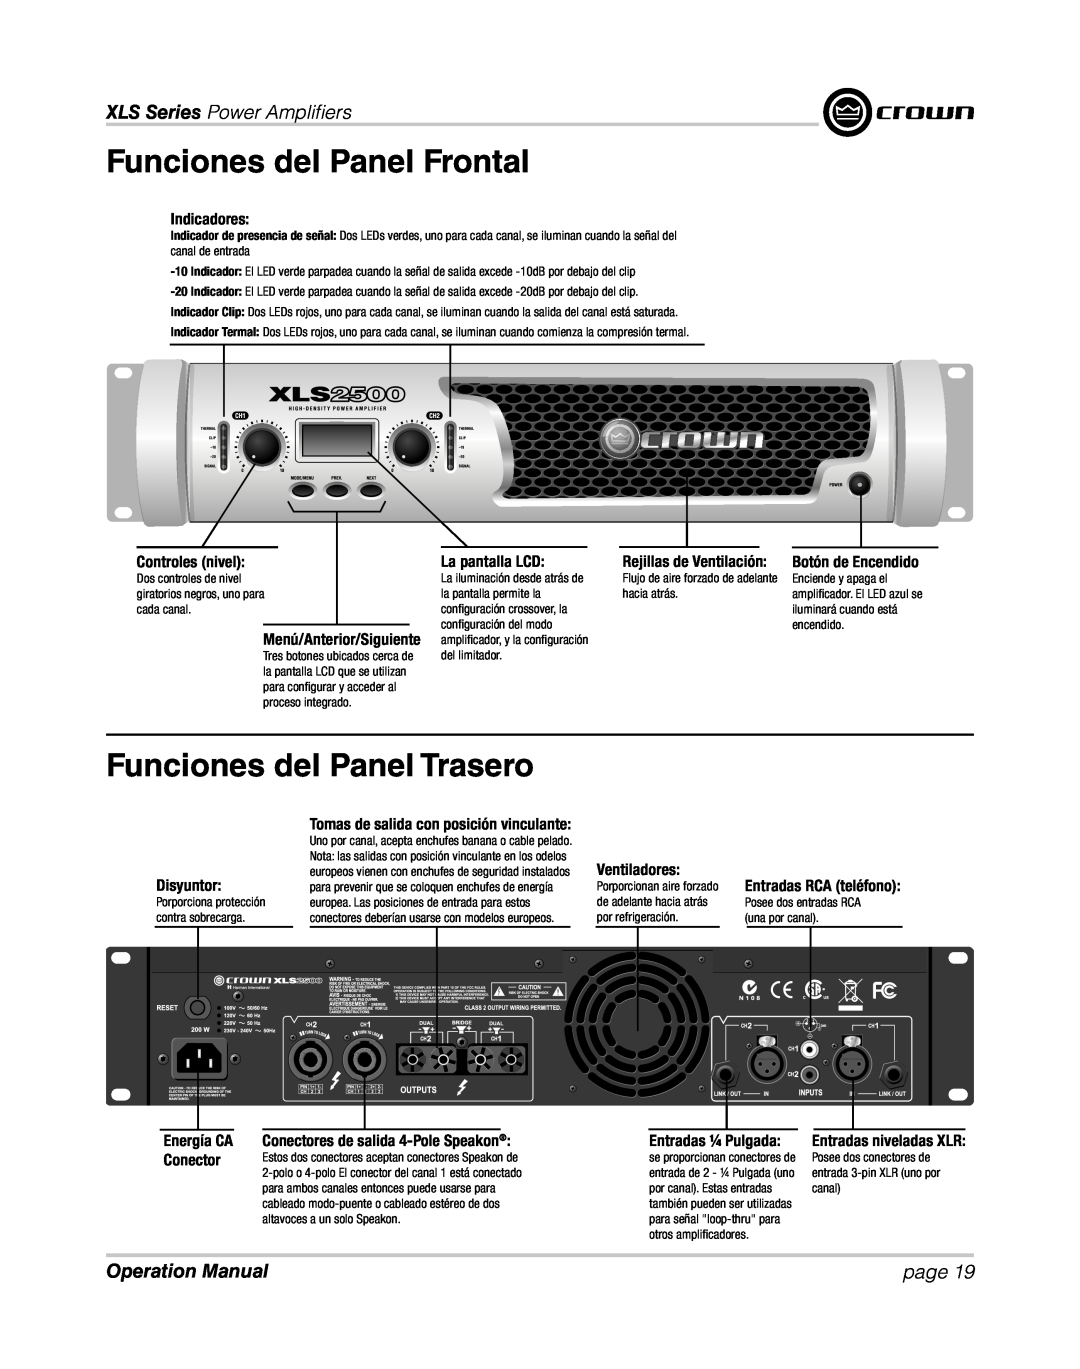 Crown XLS 1000 operation manual Funciones del Panel Frontal, Funciones del Panel Trasero, XLS Series Power Ampliﬁ ers, page 